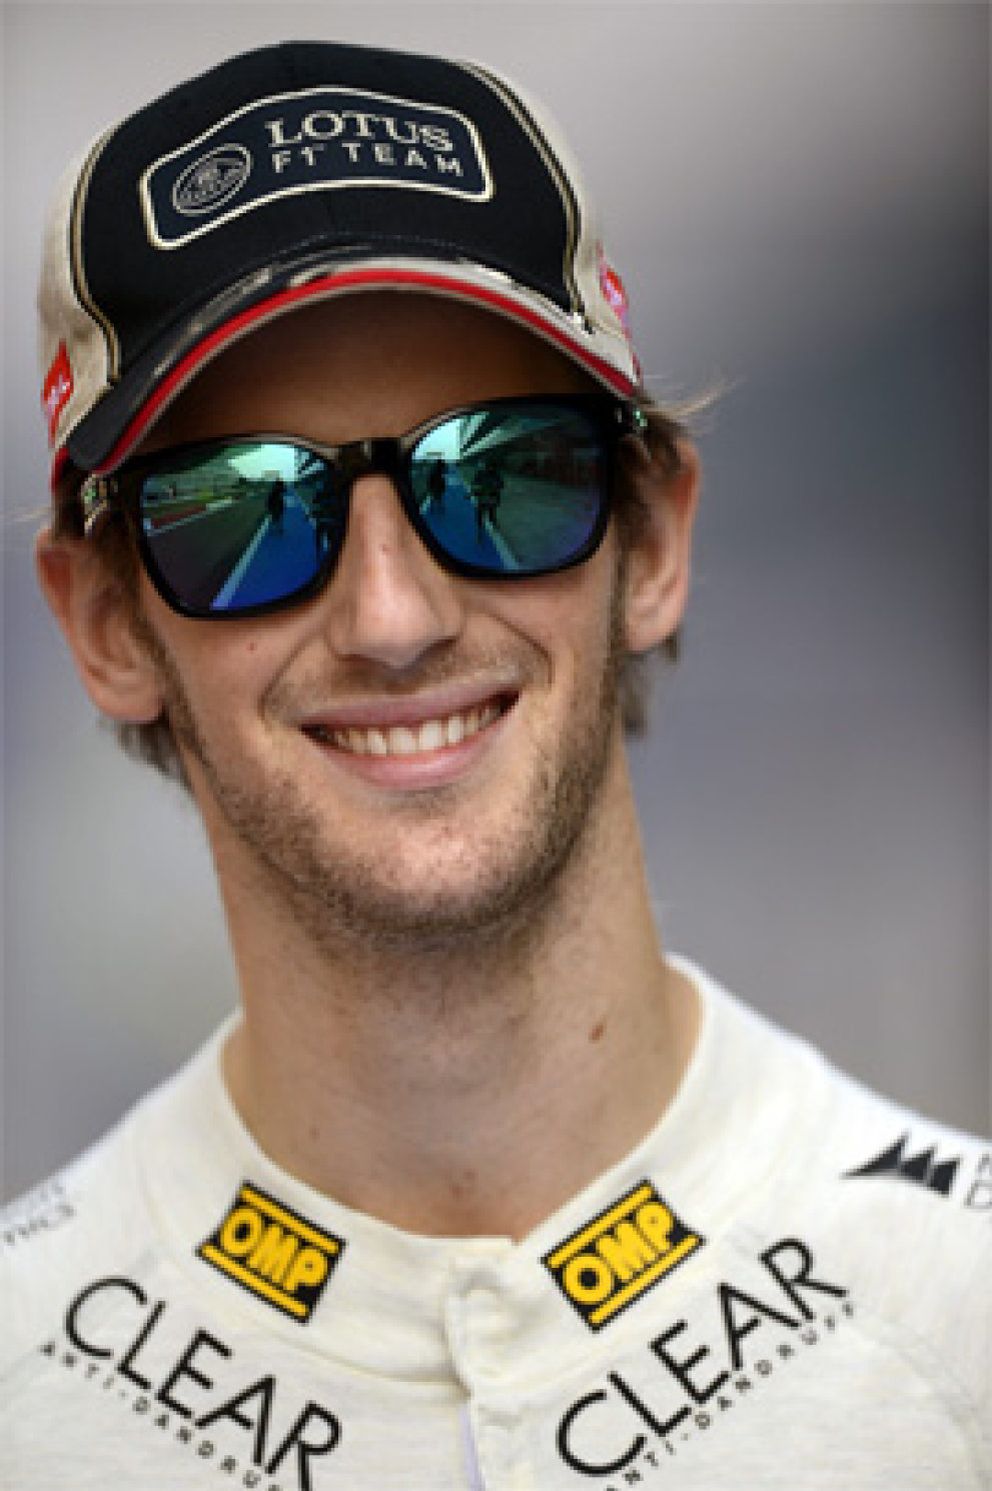 Foto: Grosjean seguirá siendo el compañero de Raikkonen en Lotus en 2013